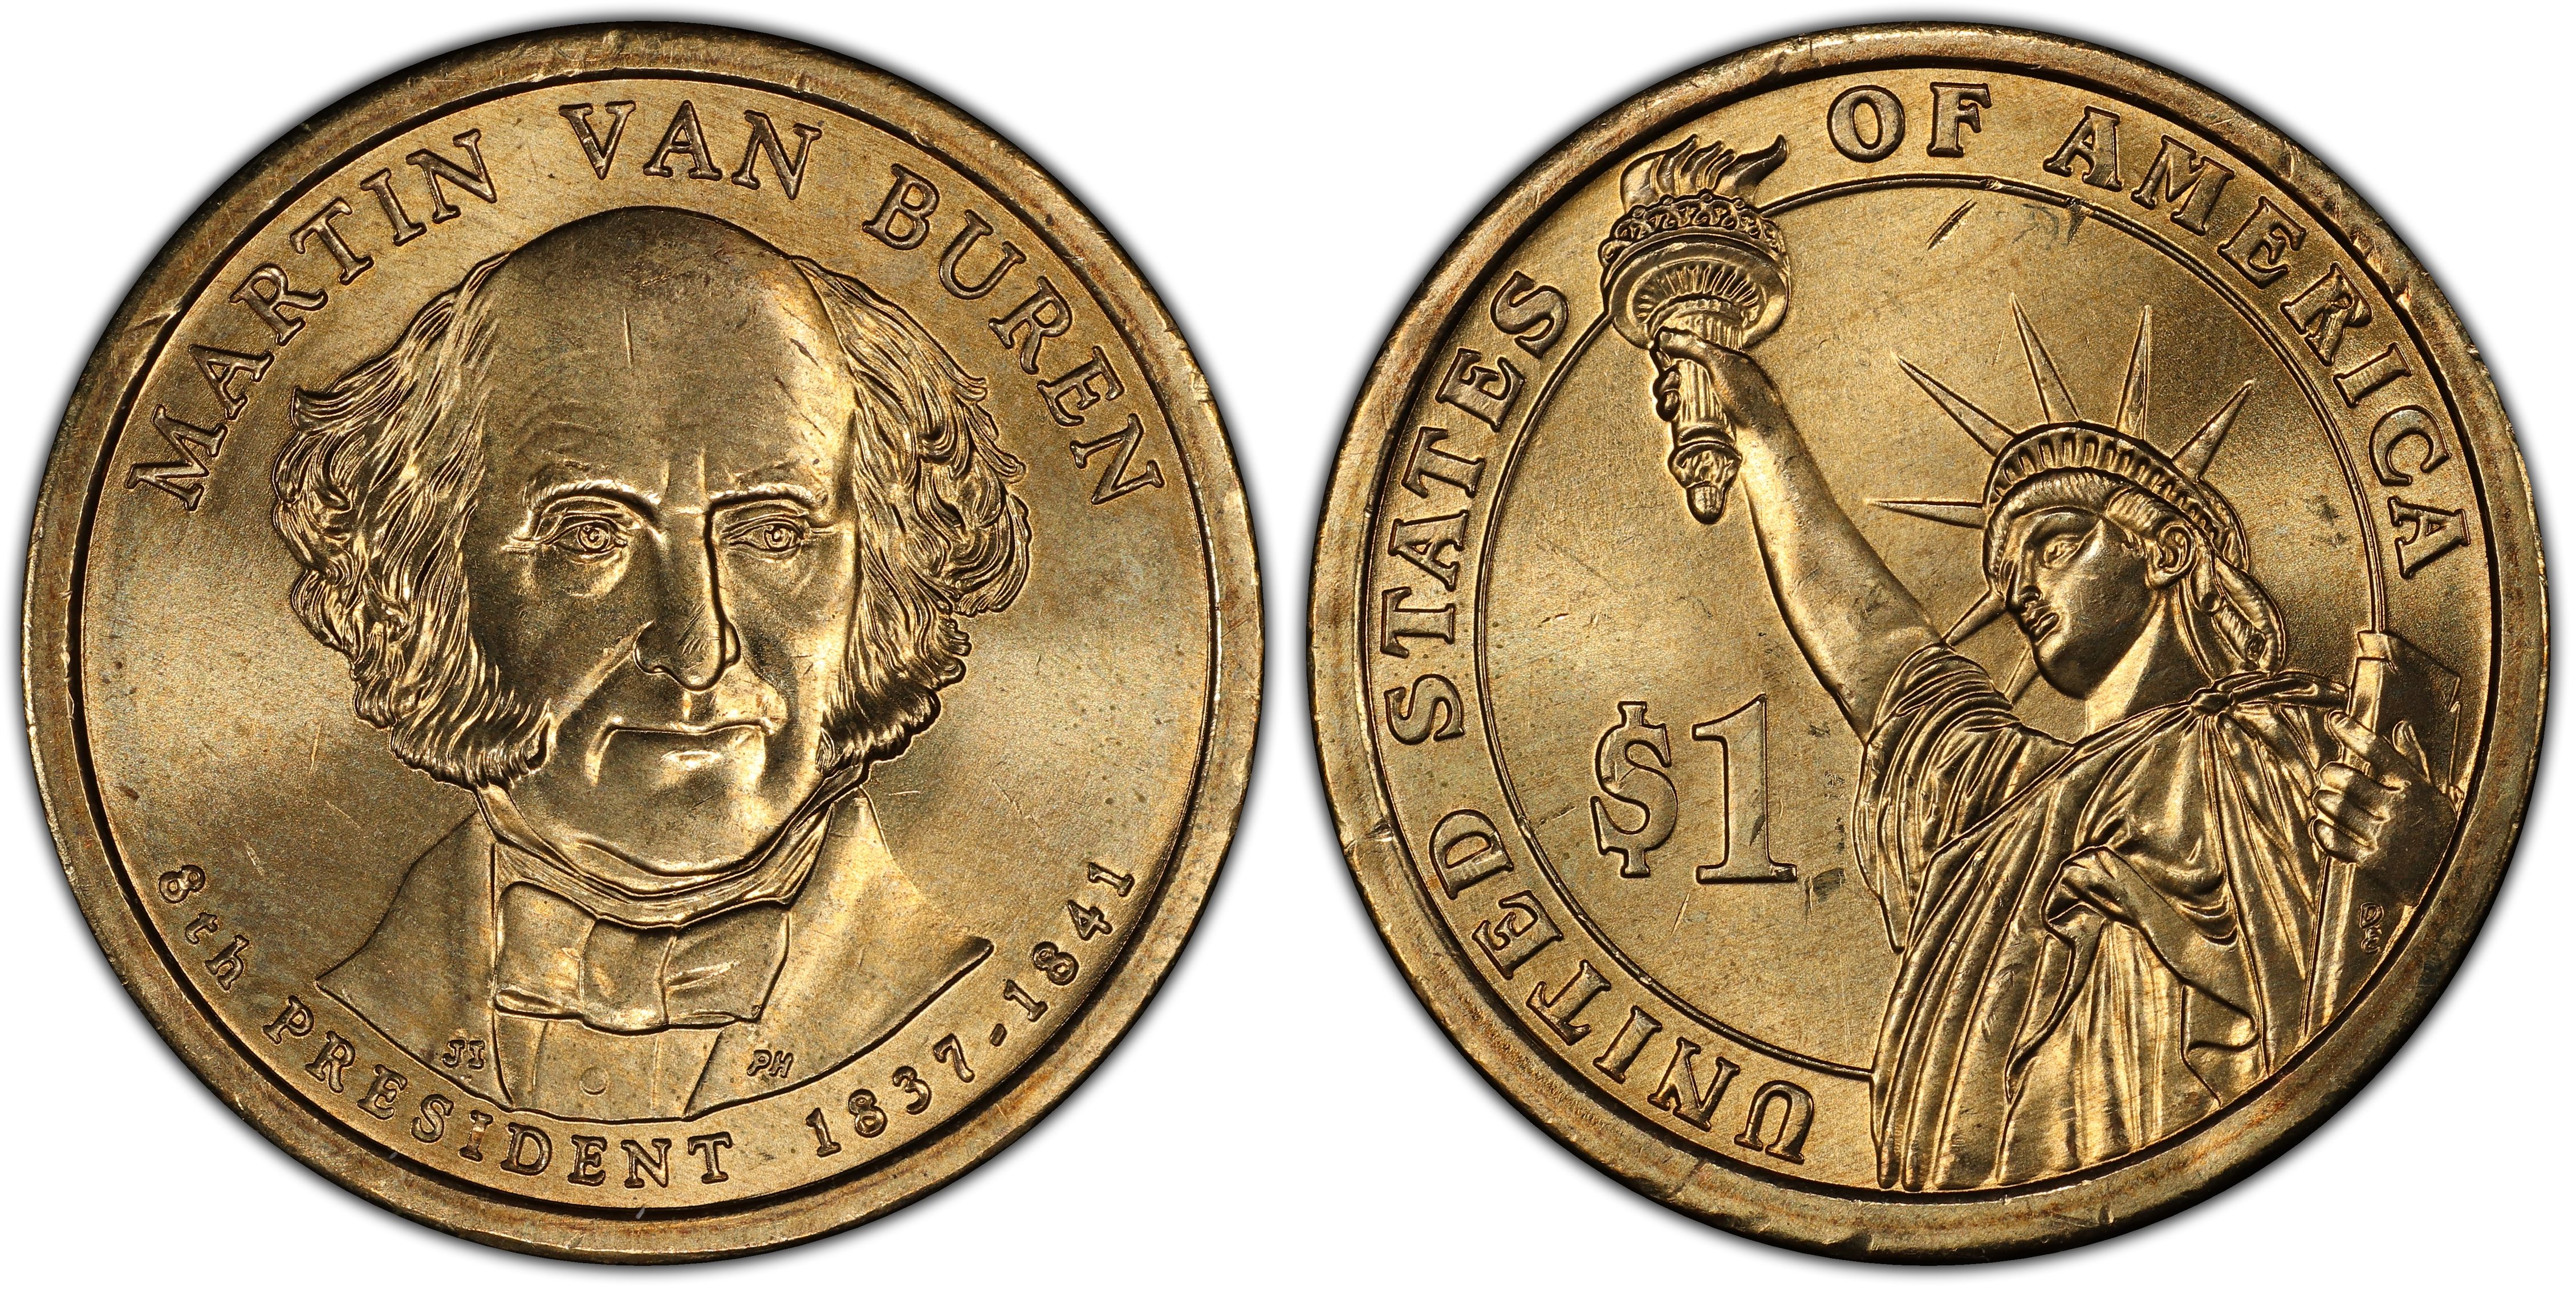 Martin Van Buren 2008D Gold Dollar Type 1 Clad Coin 8th President Denver 378 